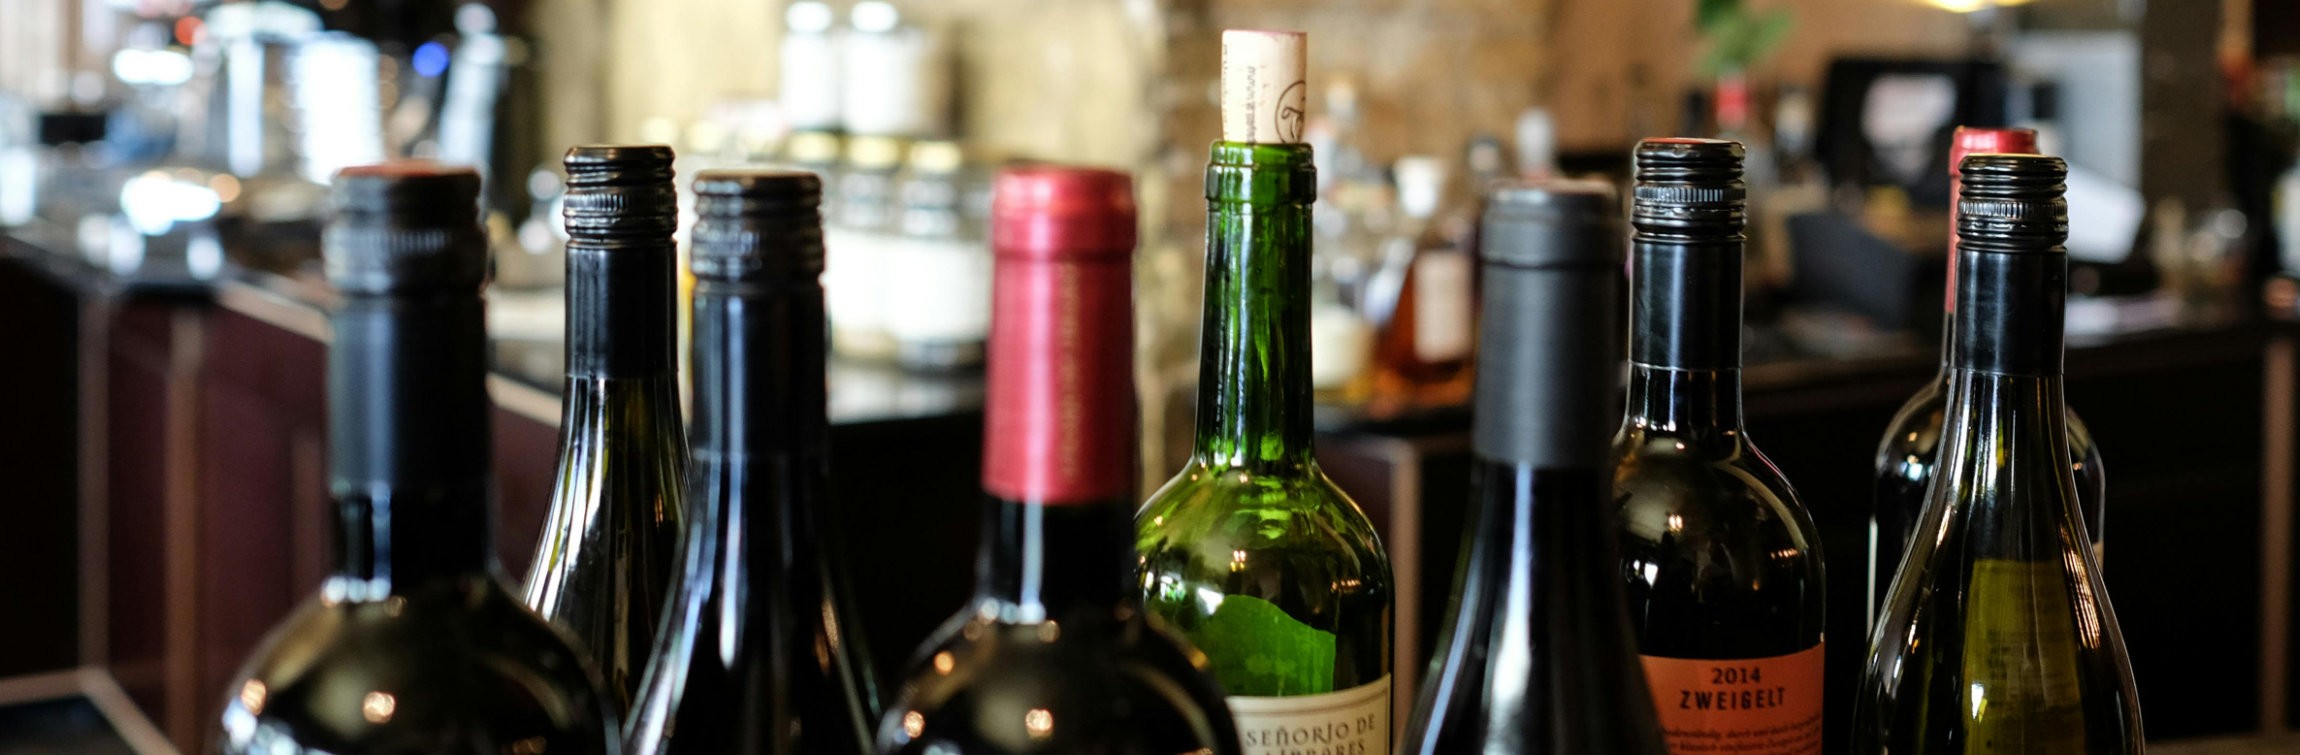 Sekrety etykiet winiarskich: Jak stać się ekspertem od win